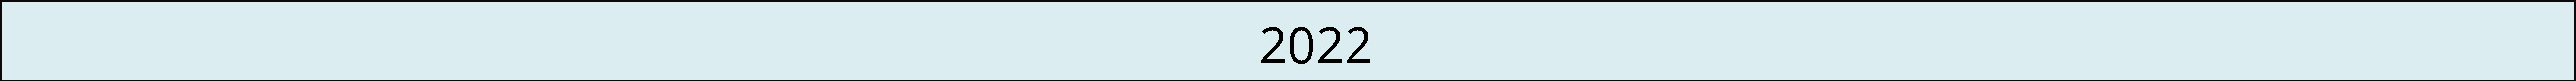 2022. Figur